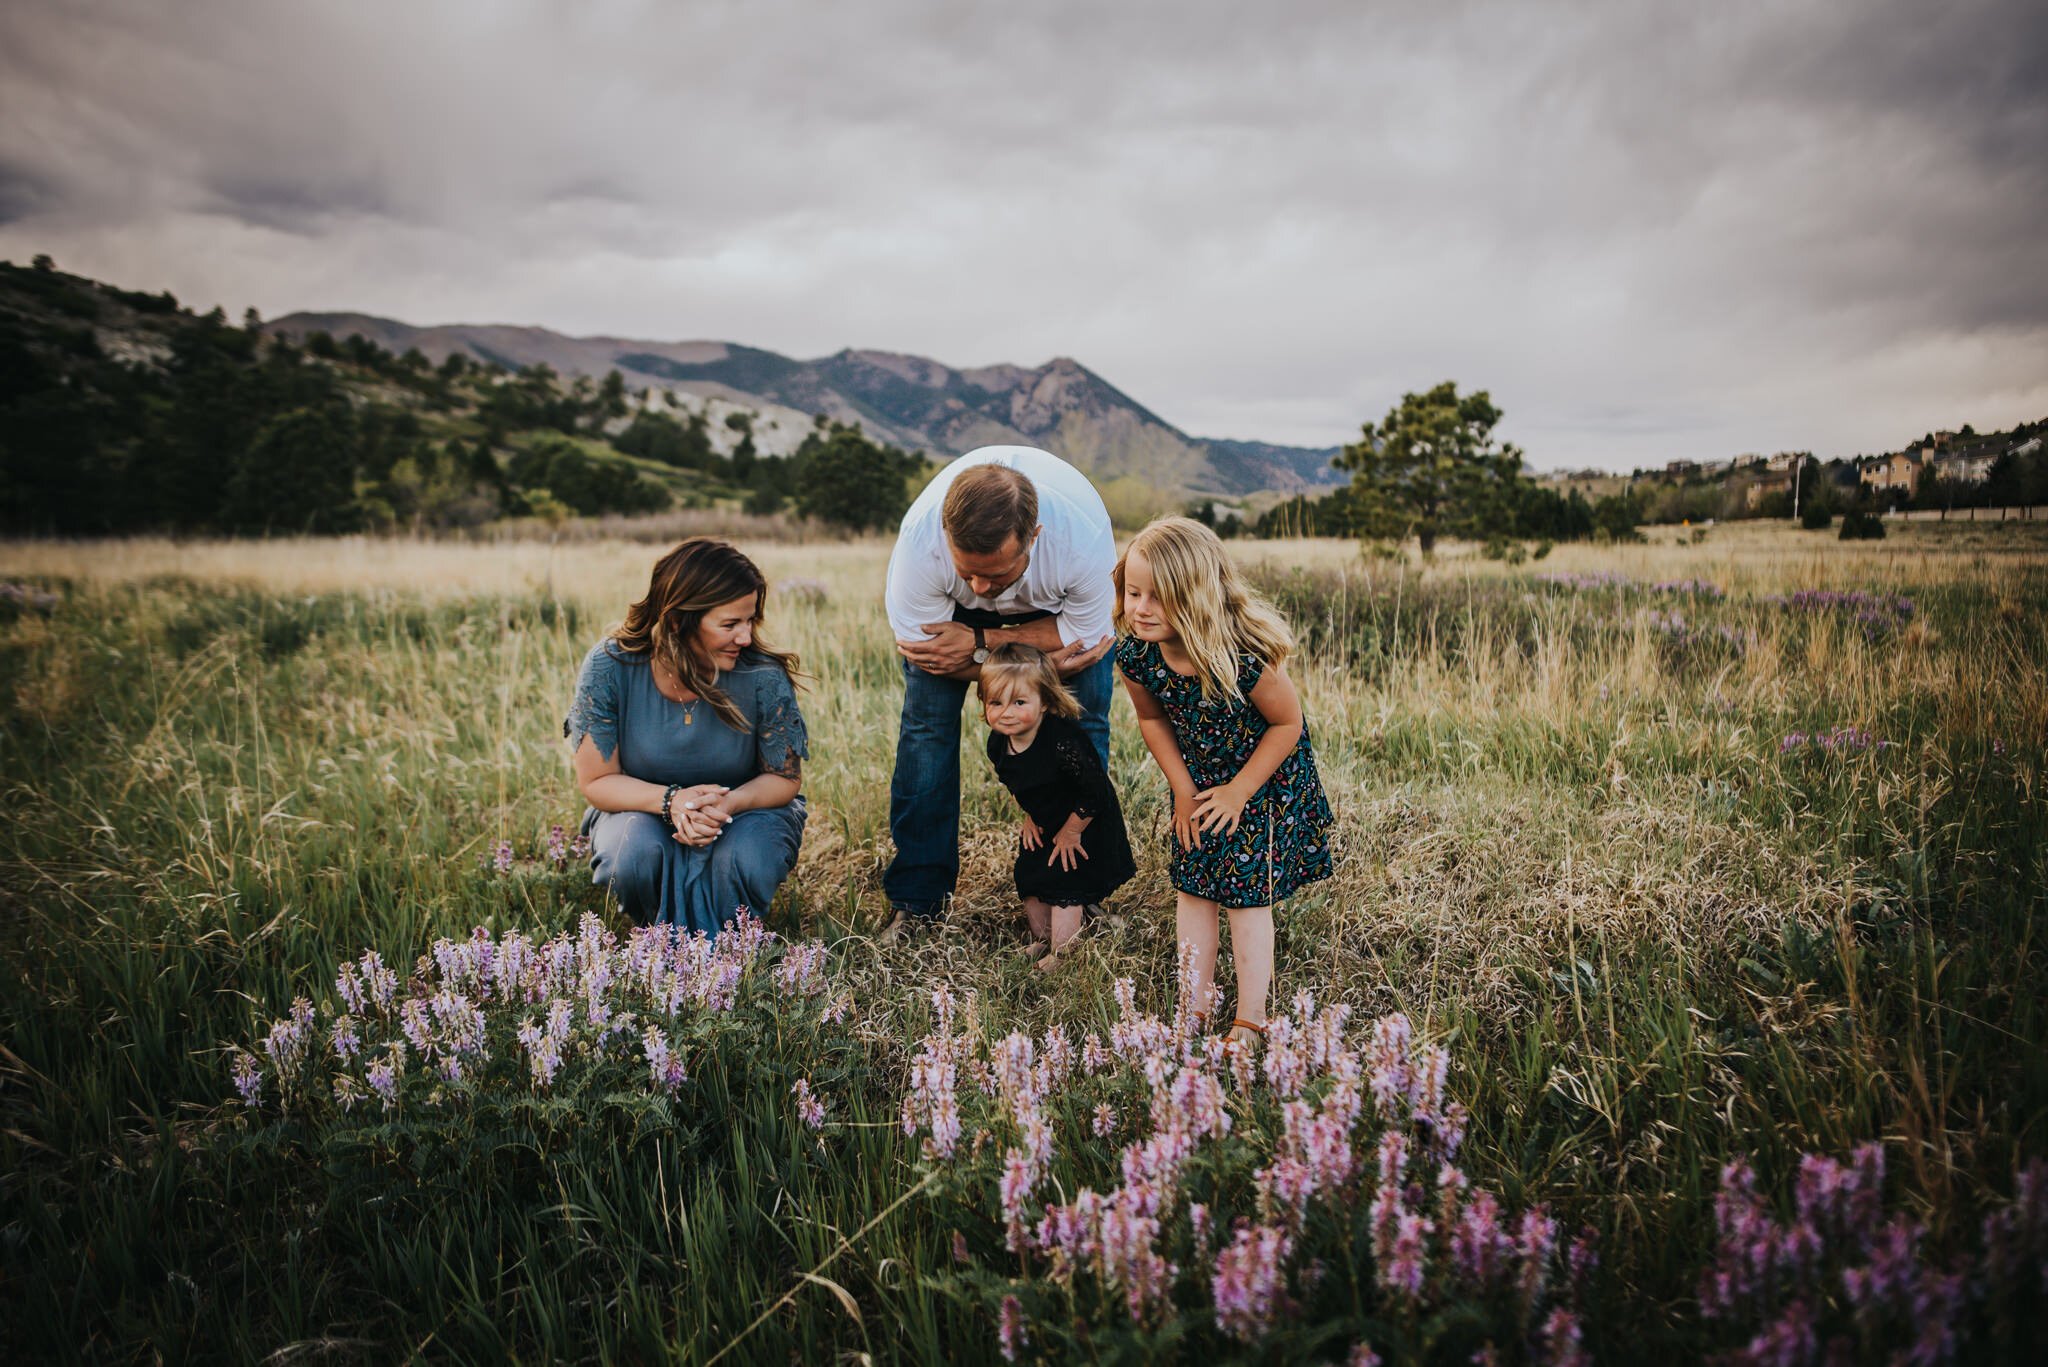 Mary+Lousia+Wiencek+Family+Session+Colorado+Springs+Colorado+Sunset+Mom+Dad+Daughters+Ute+Valley+Park+Wild+Prairie+Photography-05-2020.jpeg